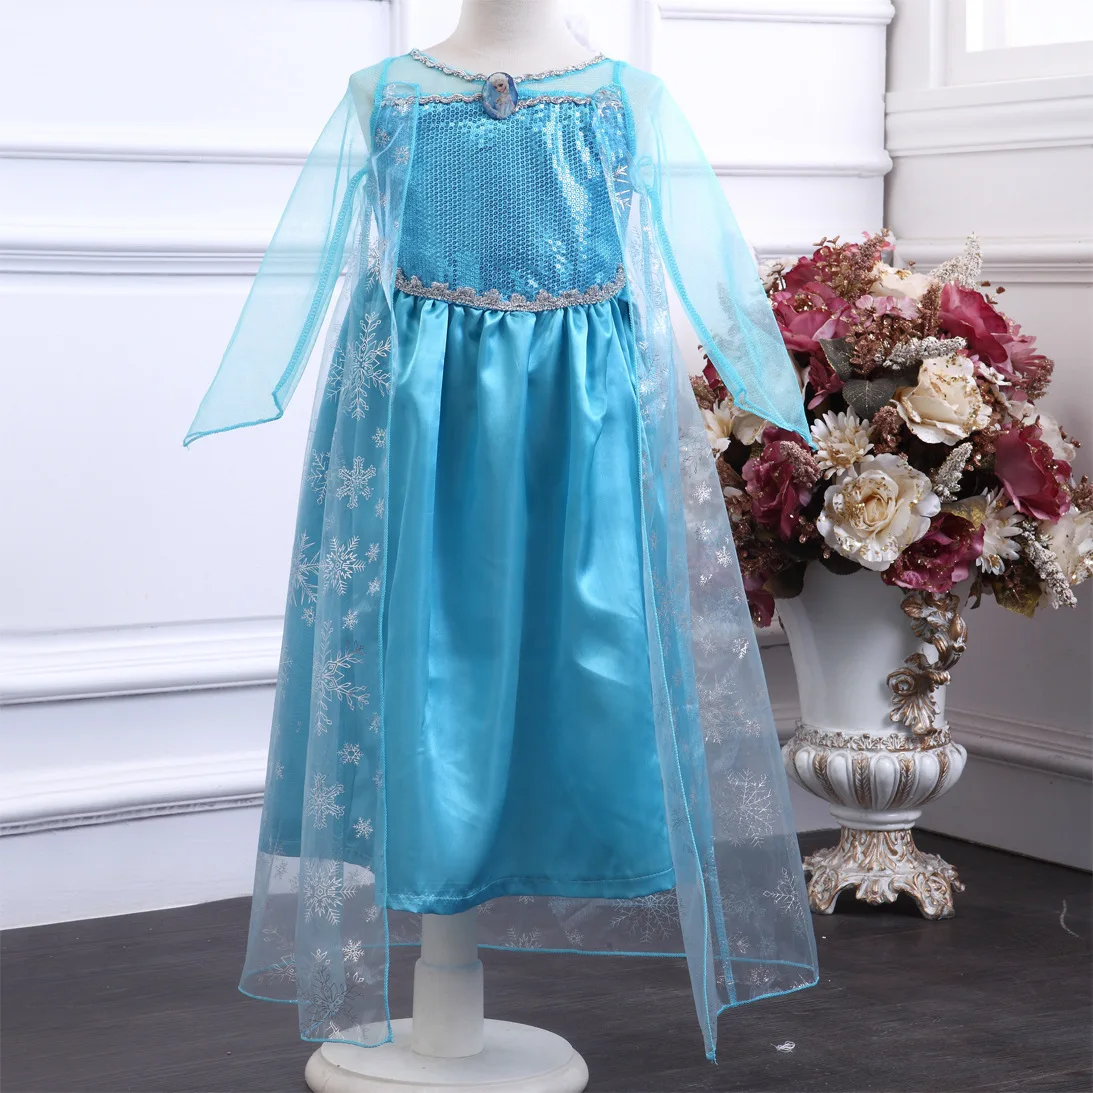 Elsa Dresses For Gilrs Princess Anna Elza Snow Queen Costume Halloween Party Vestidos Fantasia Kids Girl Dress